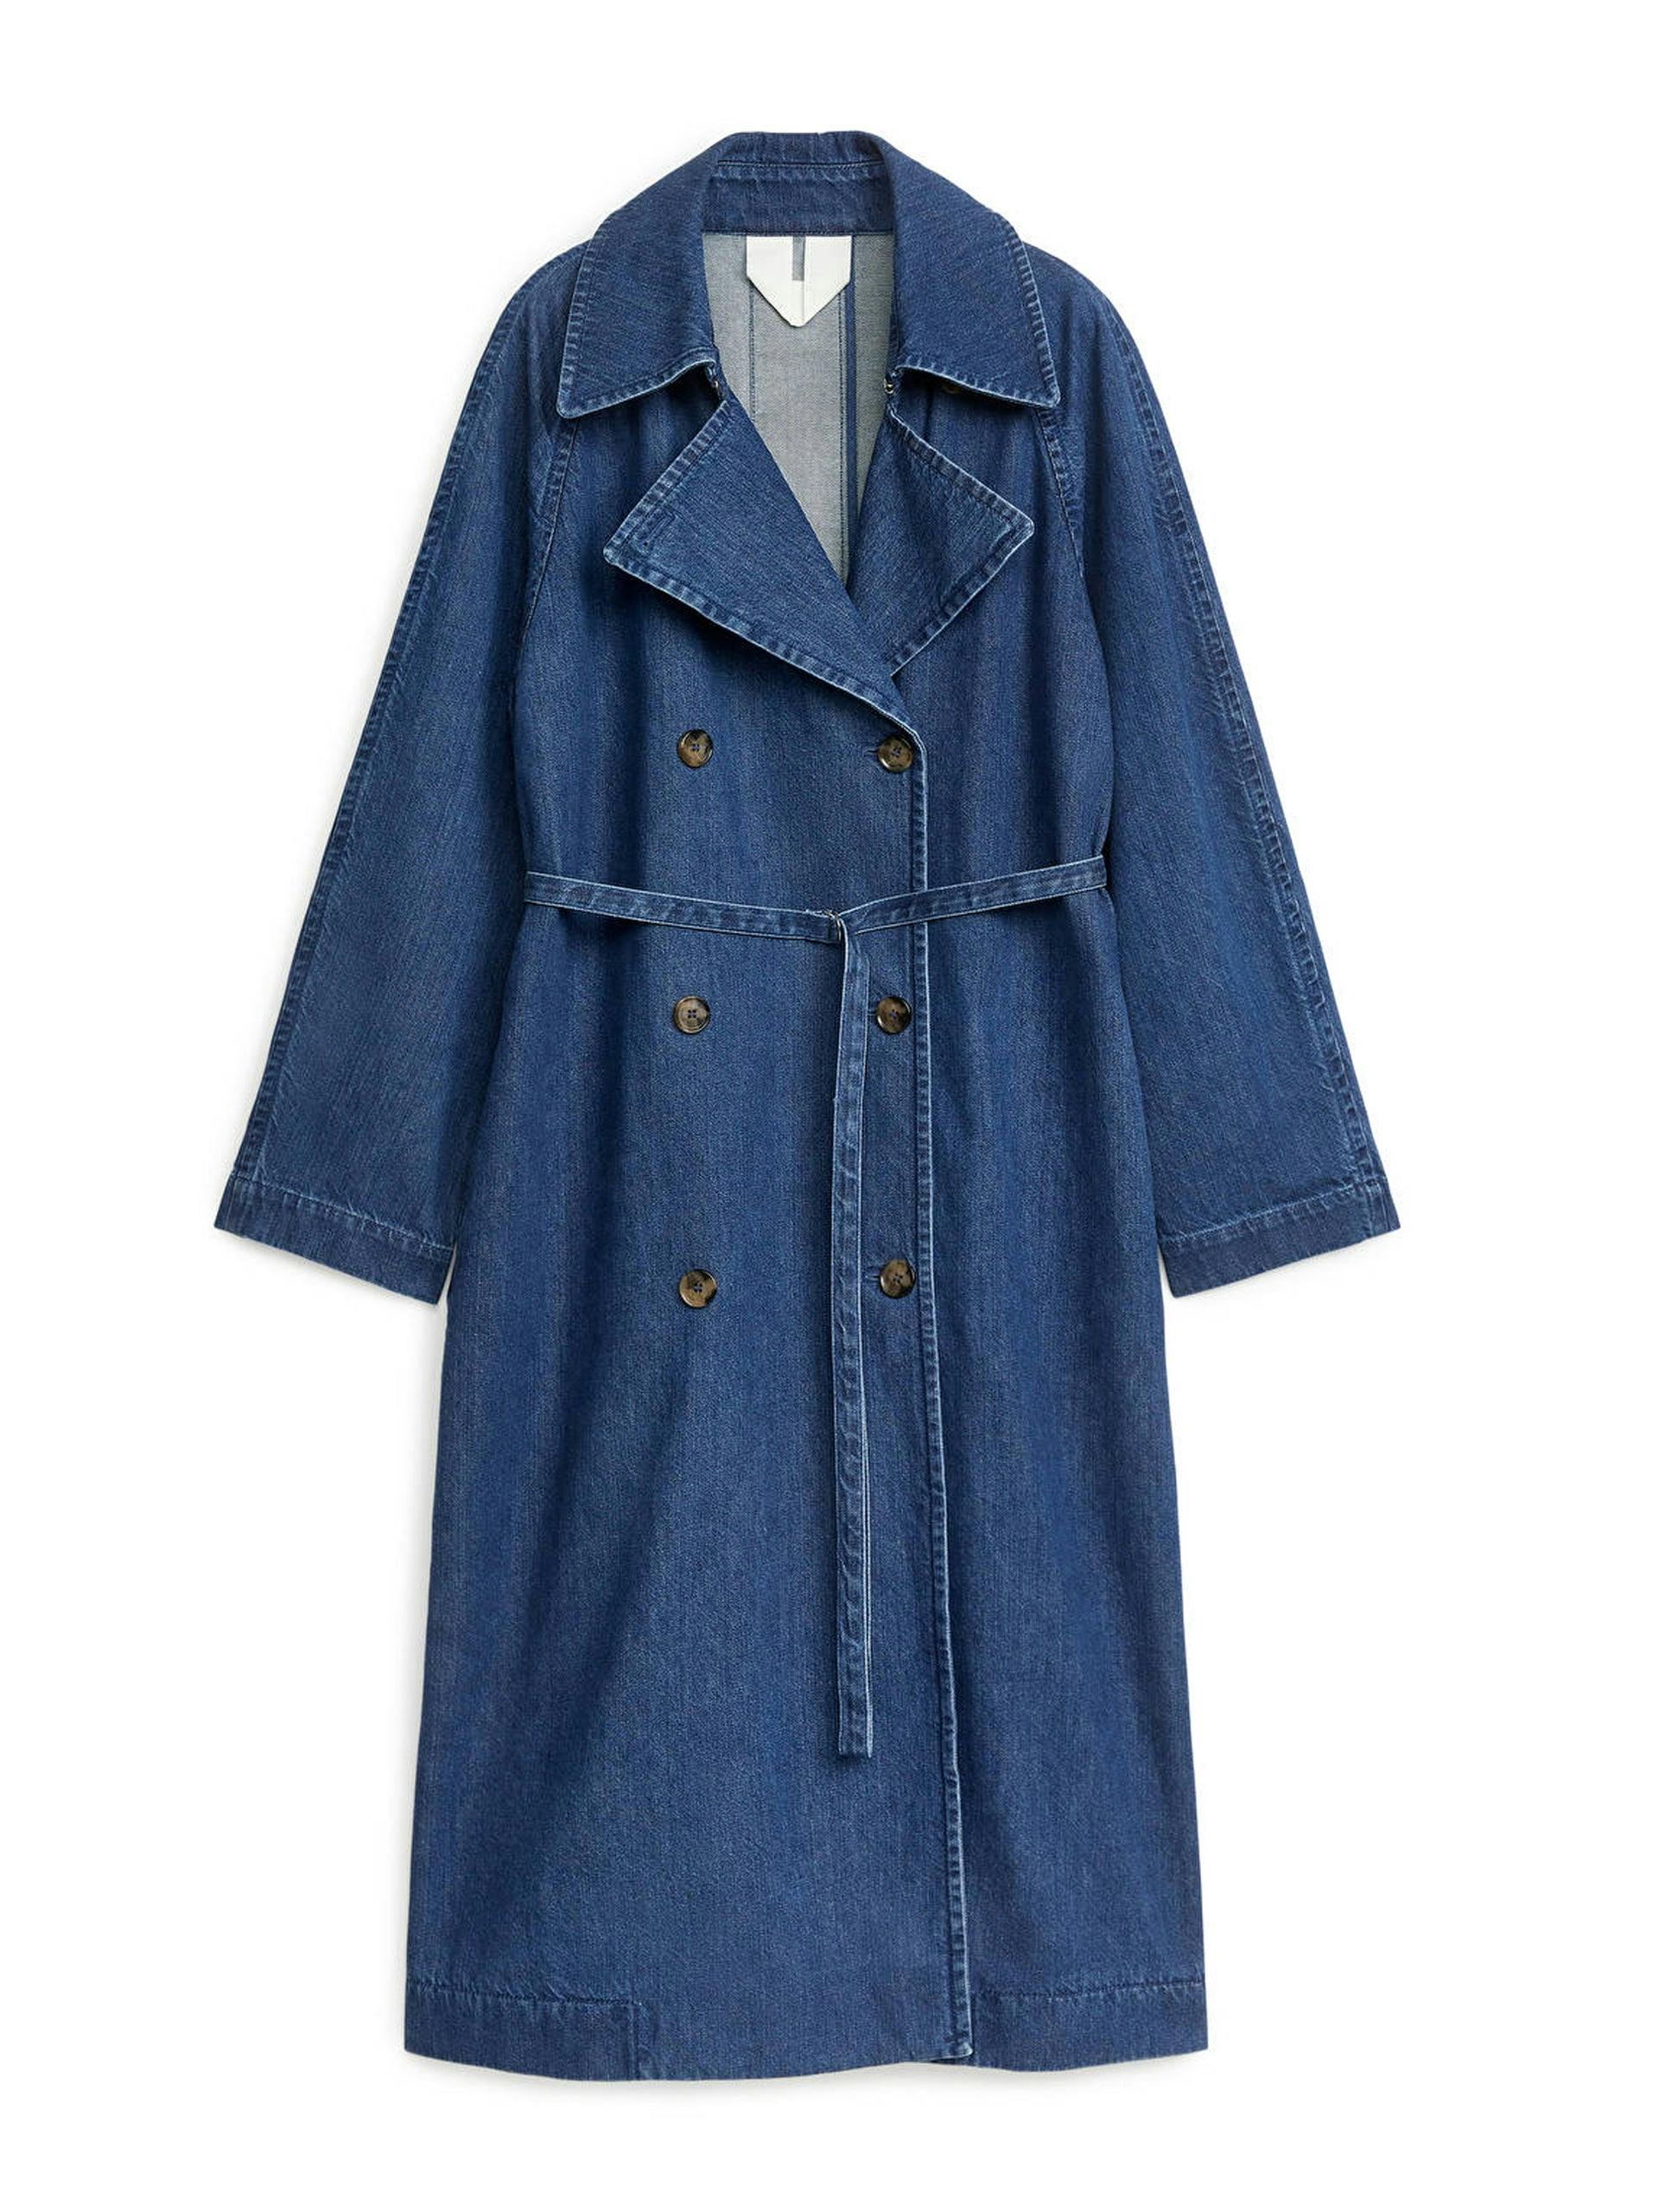 Blue denim trench coat